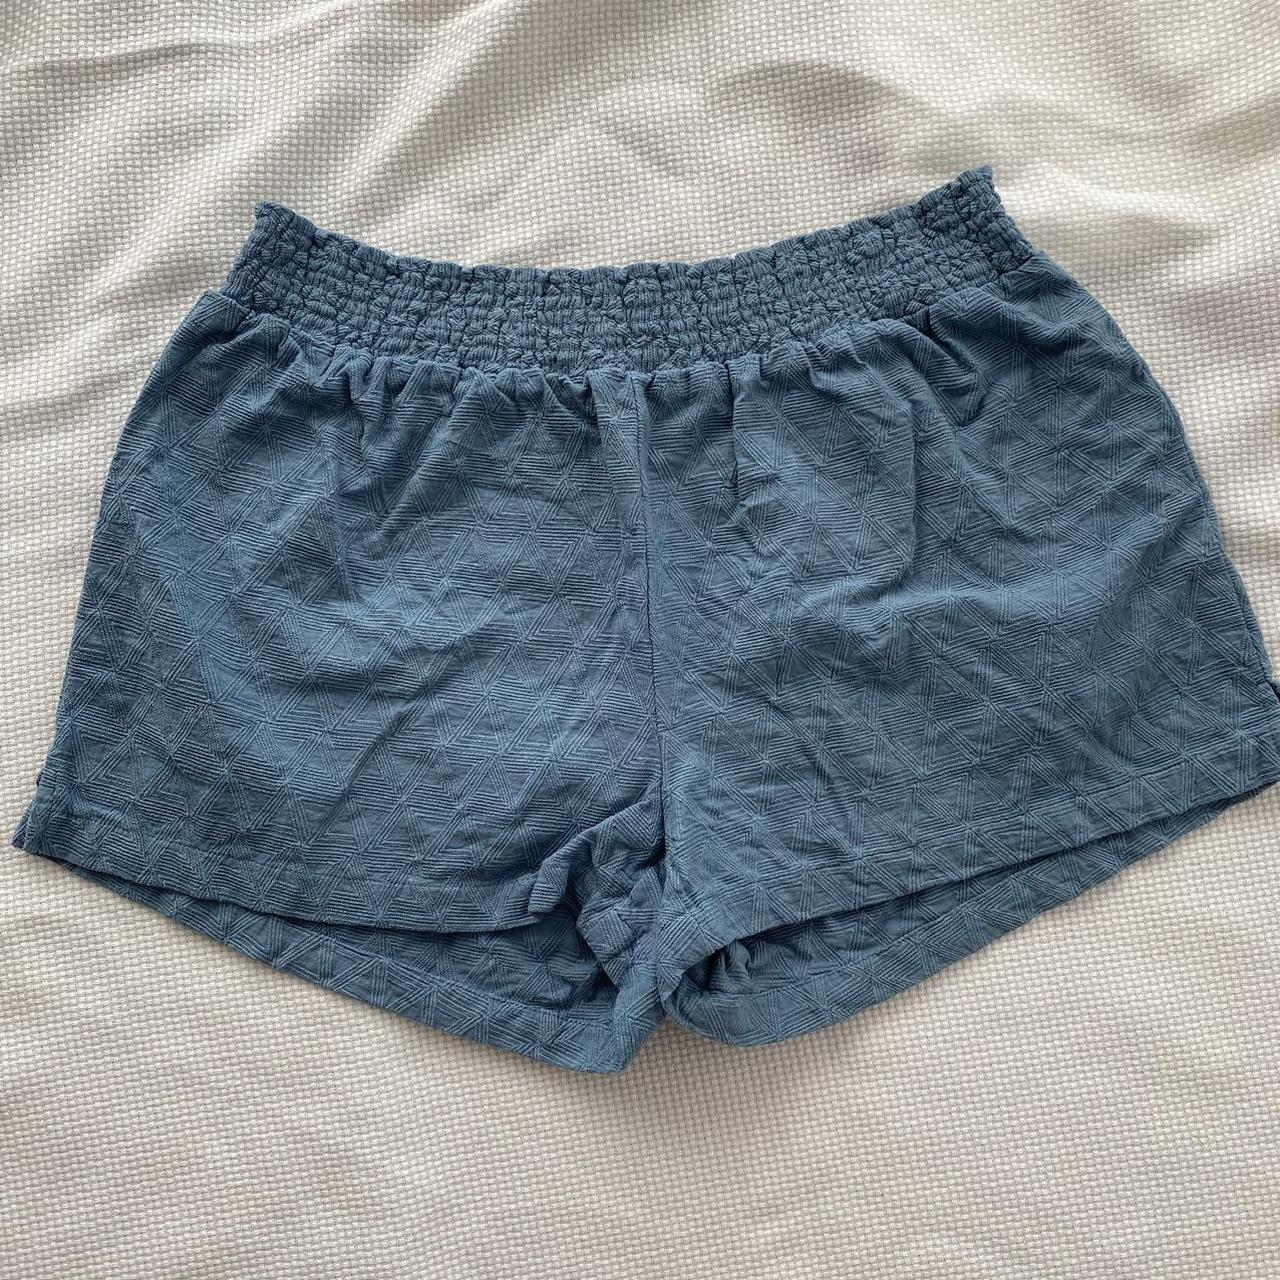 Madewell Blue Lightweight Shorts. Size Small with an... - Depop